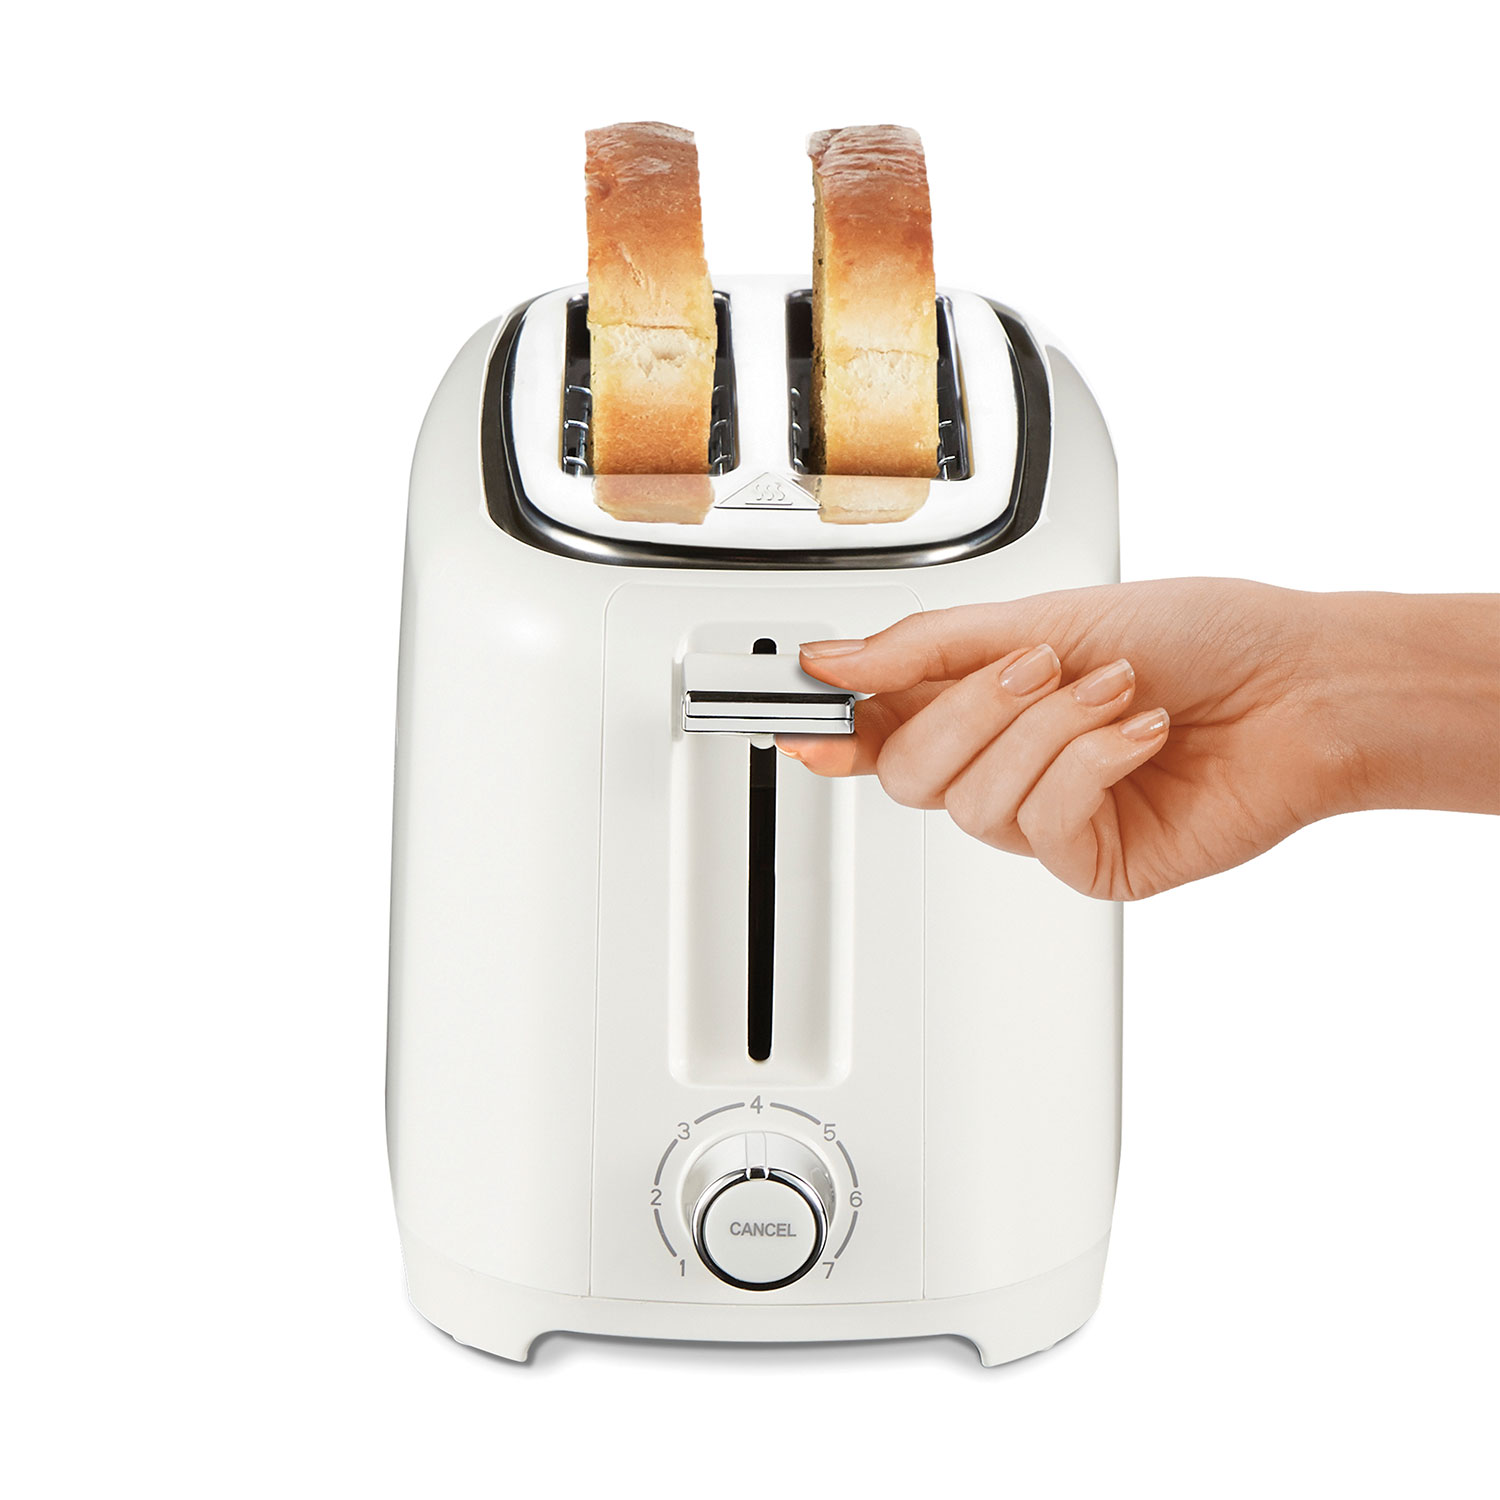 Hamilton Beach 2 Slice Toaster with Extra-Wide Slots, White